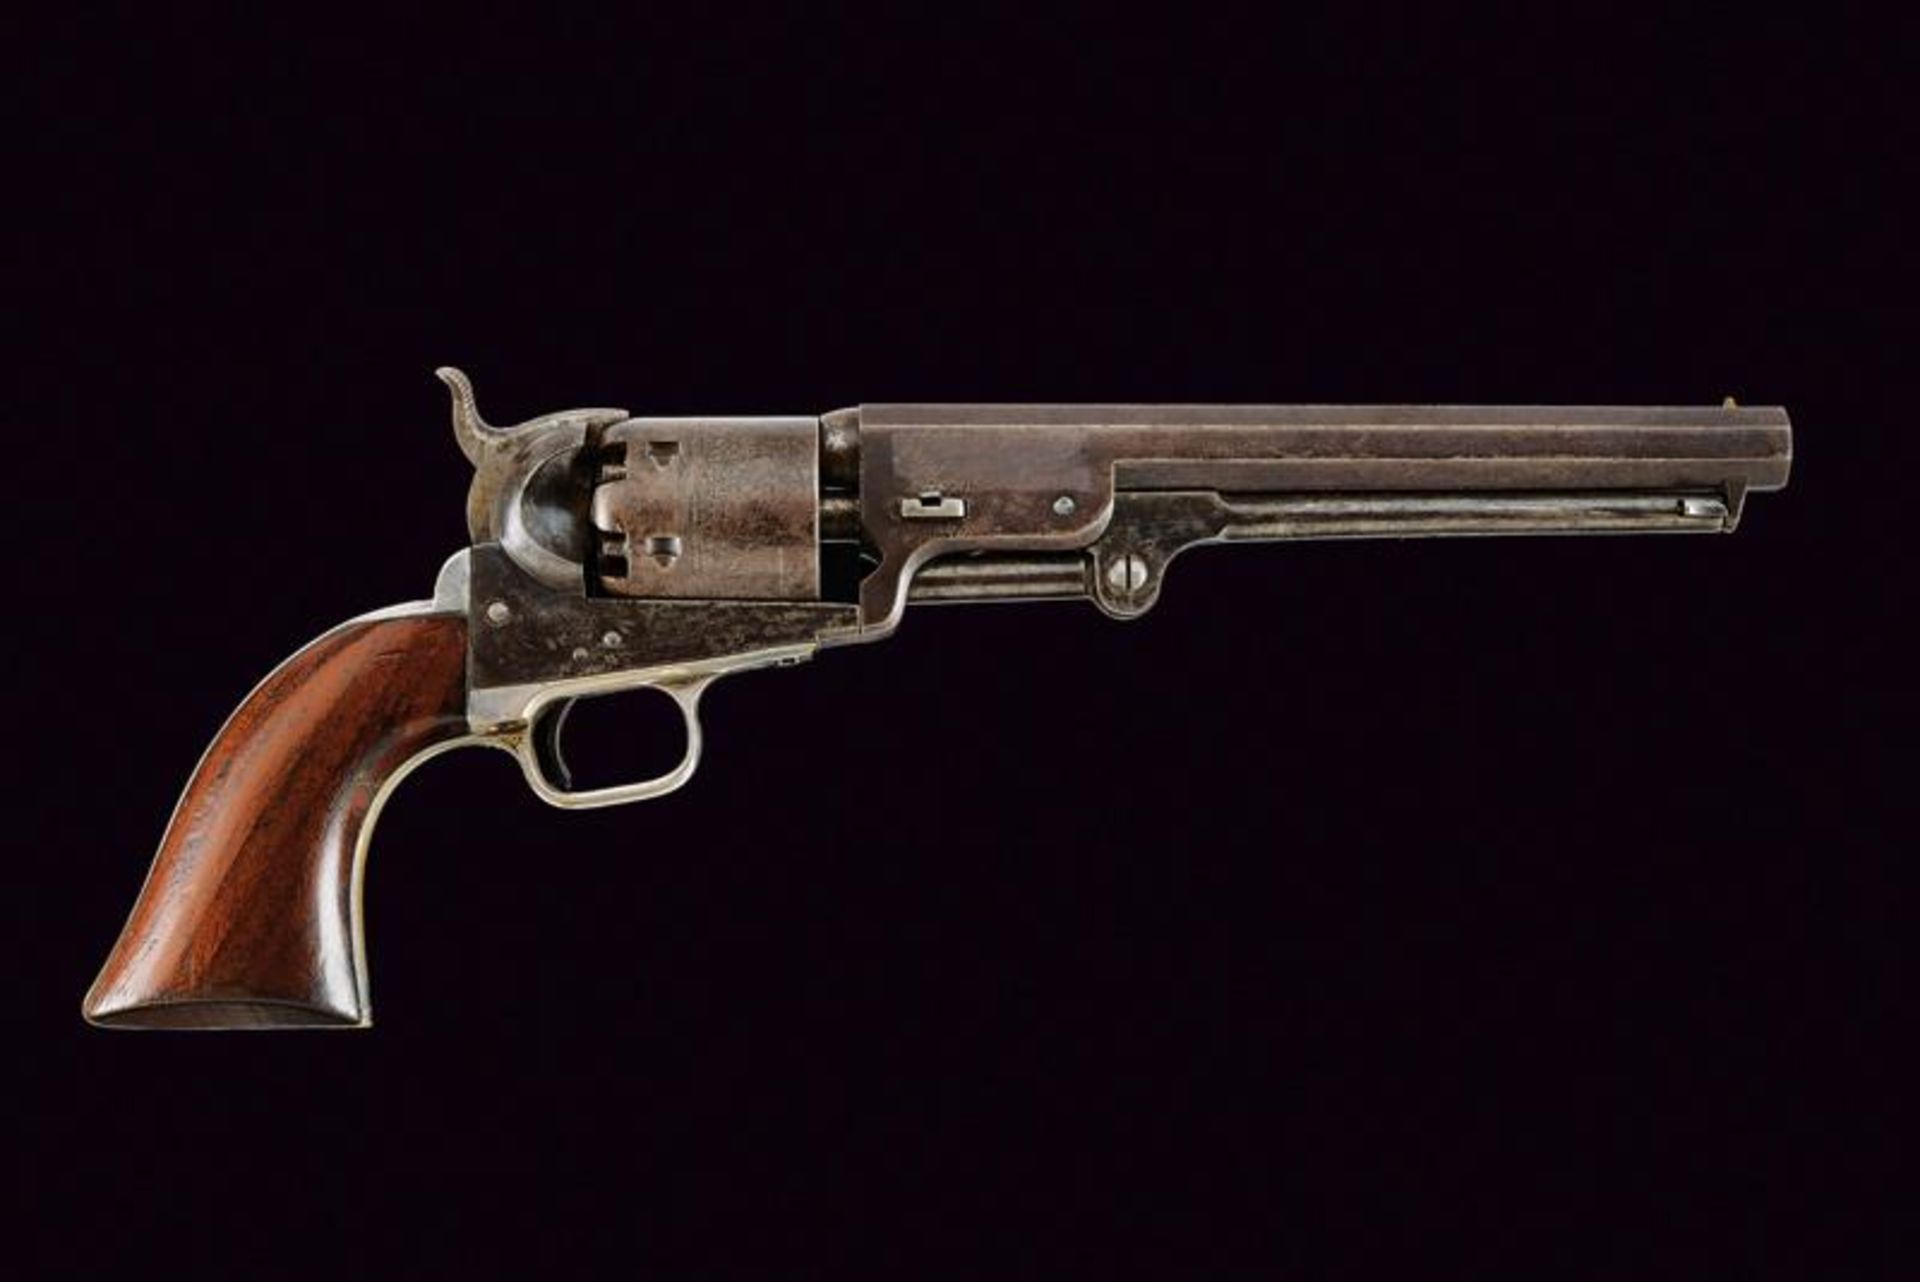 An interesting Colt Model 1851 Navy Revolver